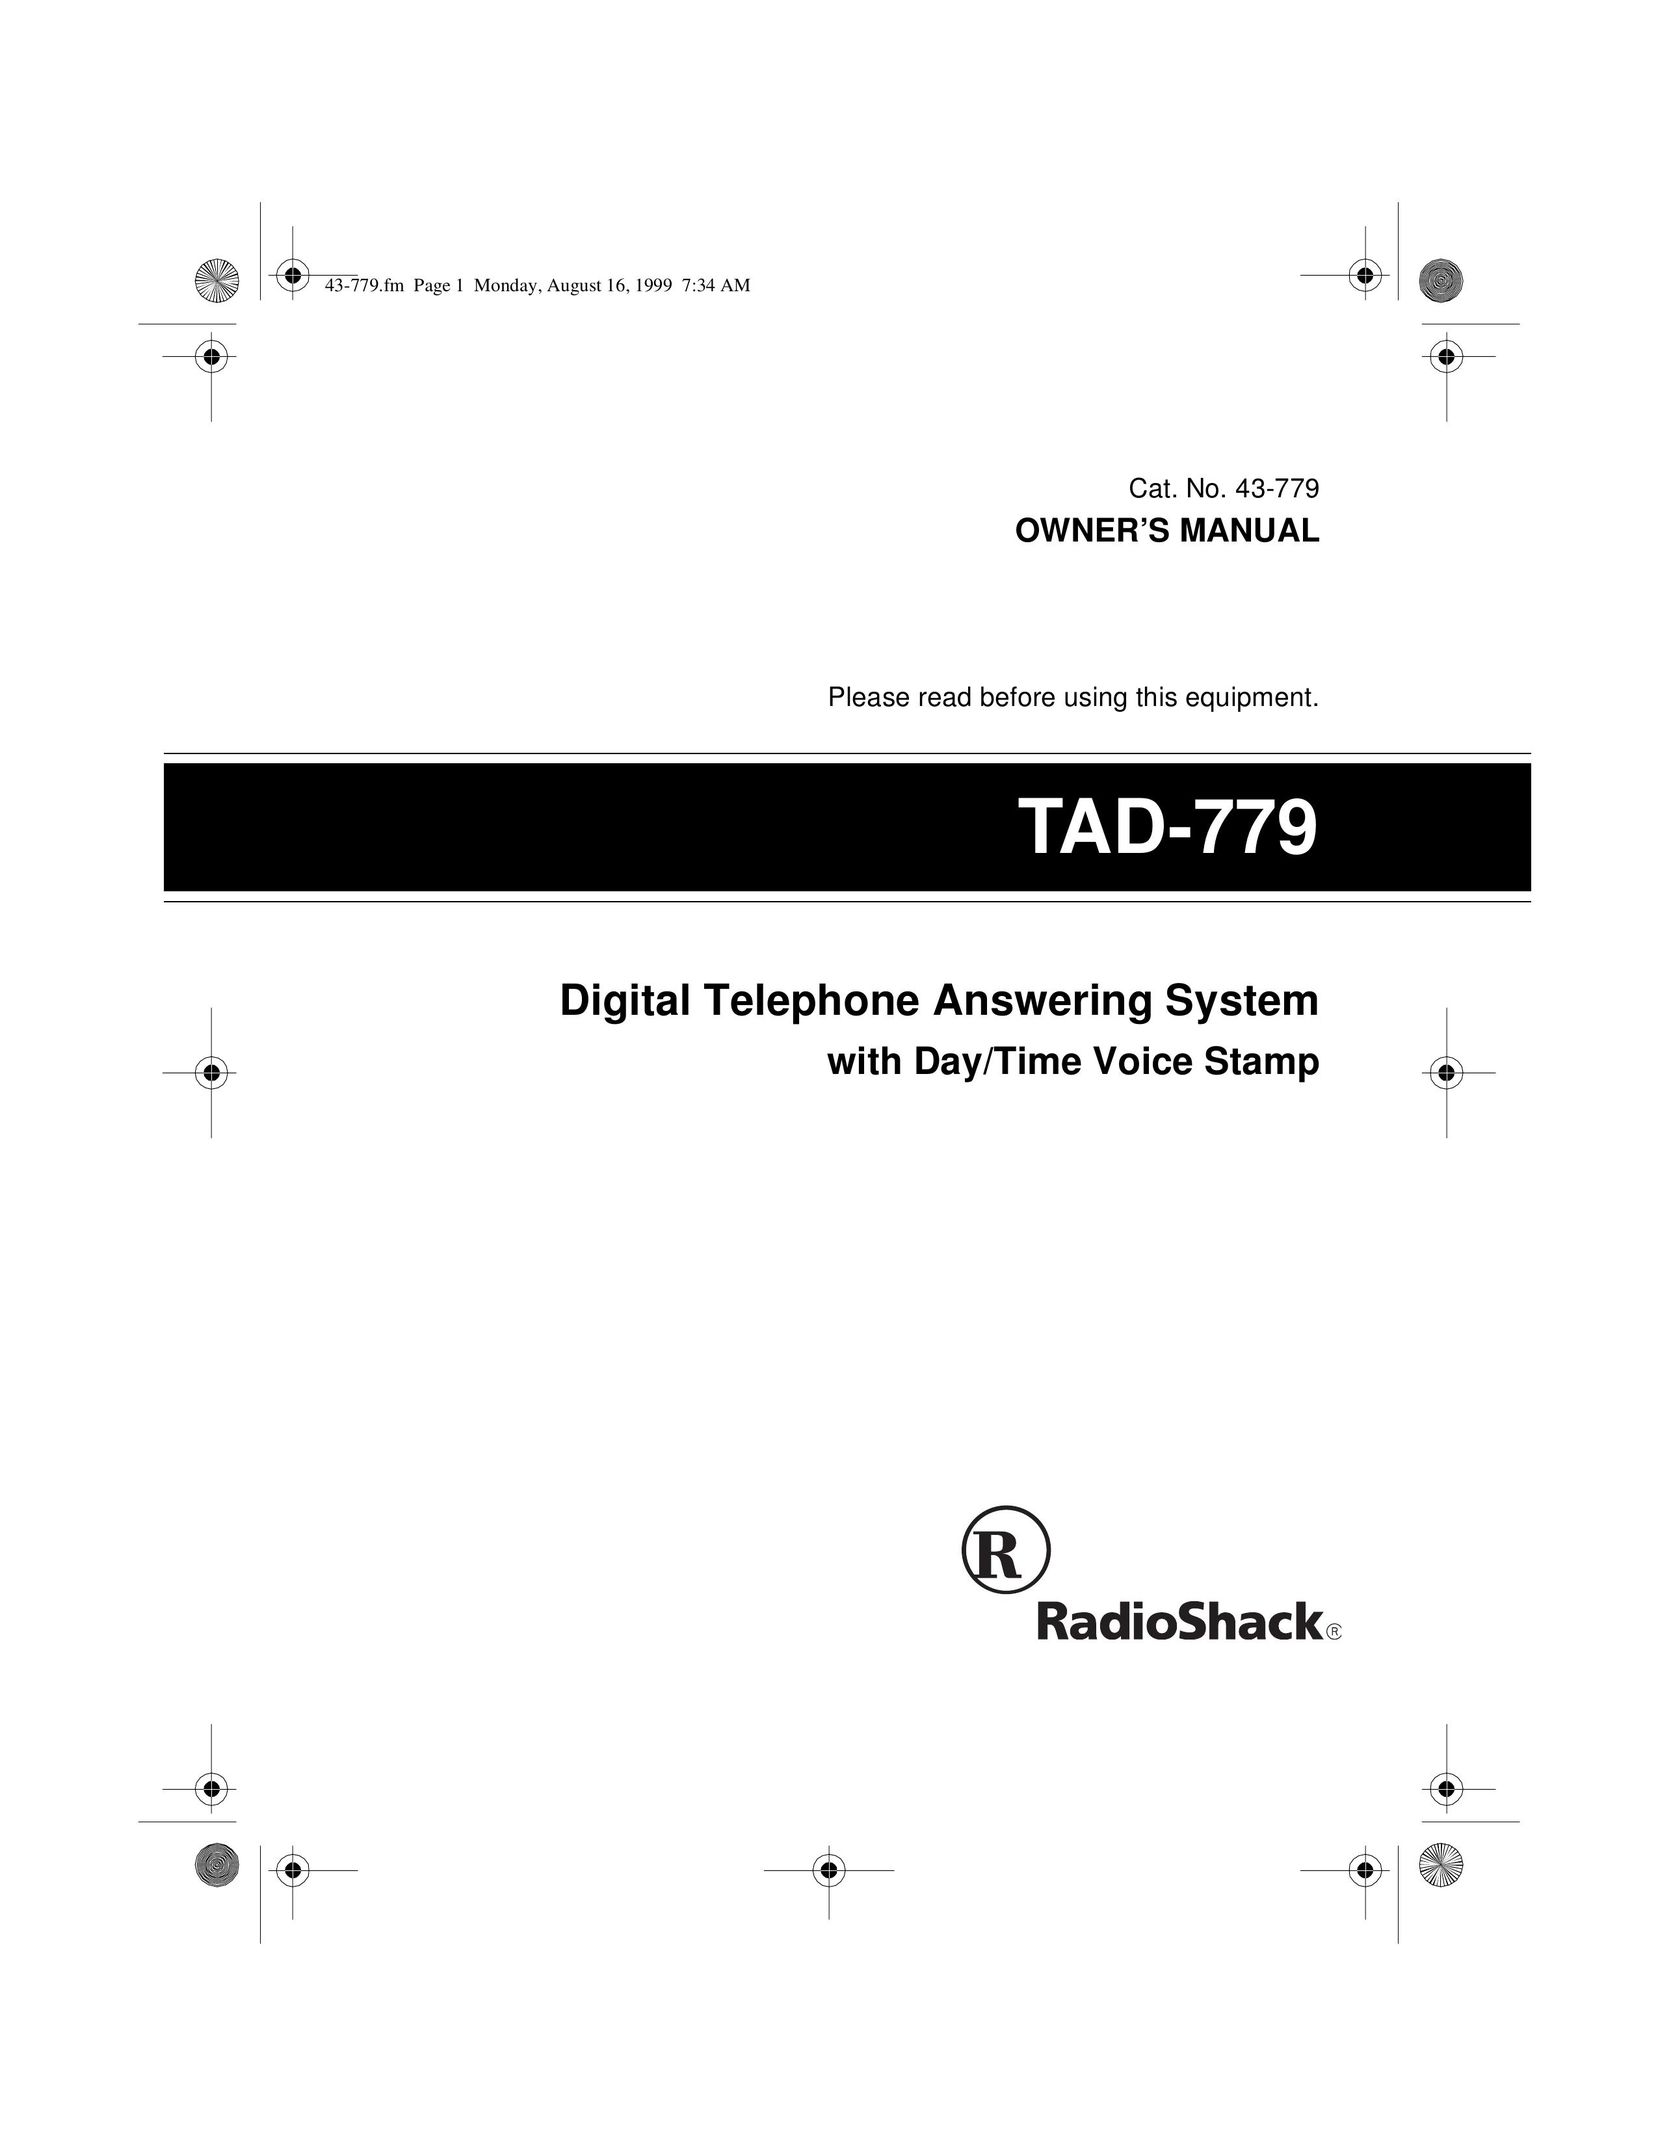 Radio Shack TAD-779 Answering Machine User Manual